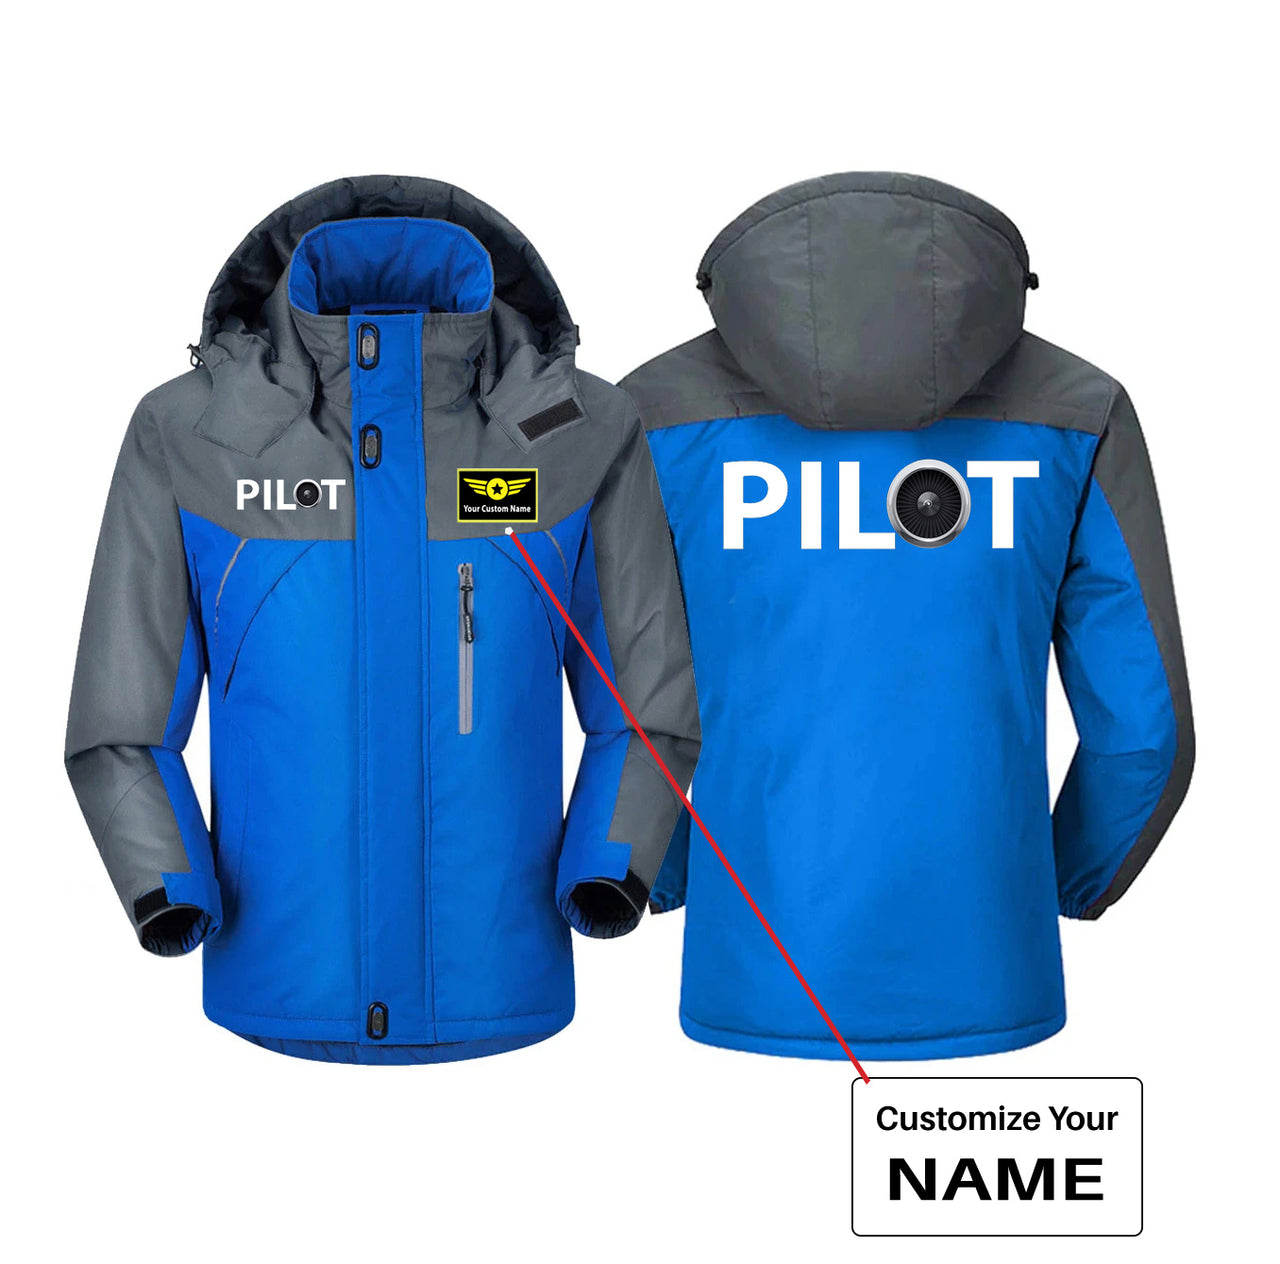 Pilot & Jet Engine Designed Thick Winter Jackets